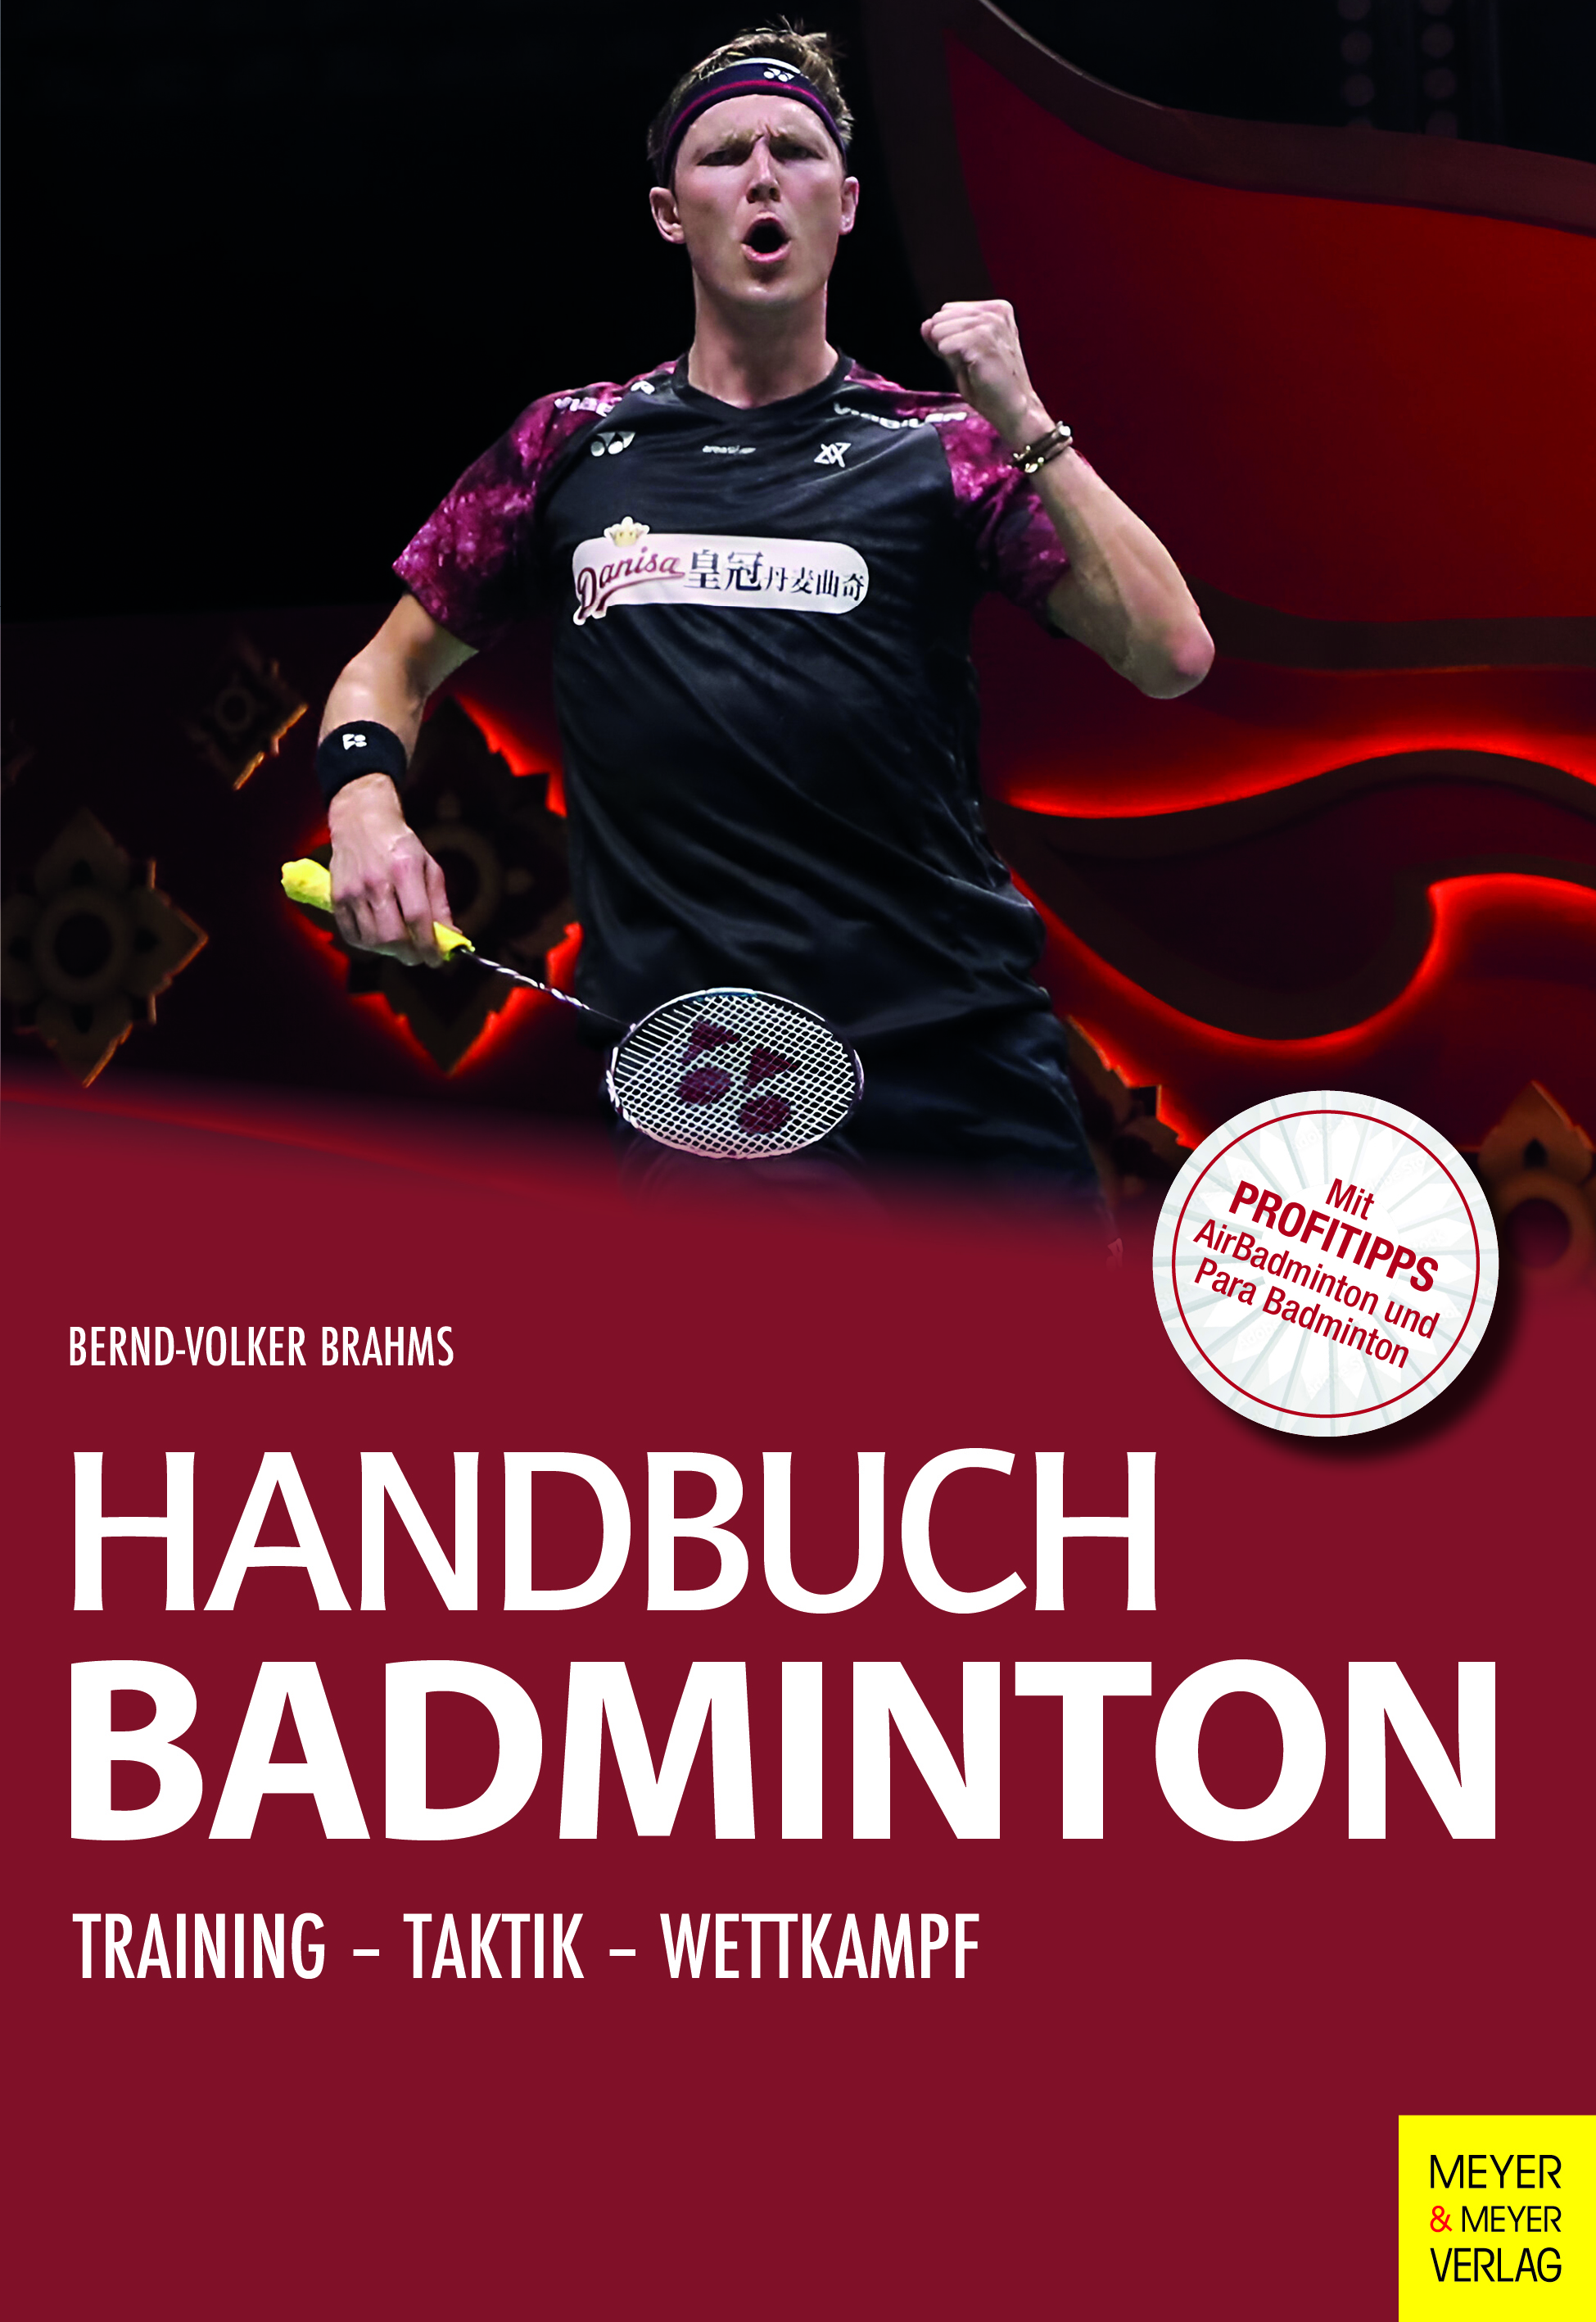 Handbuch Badminton